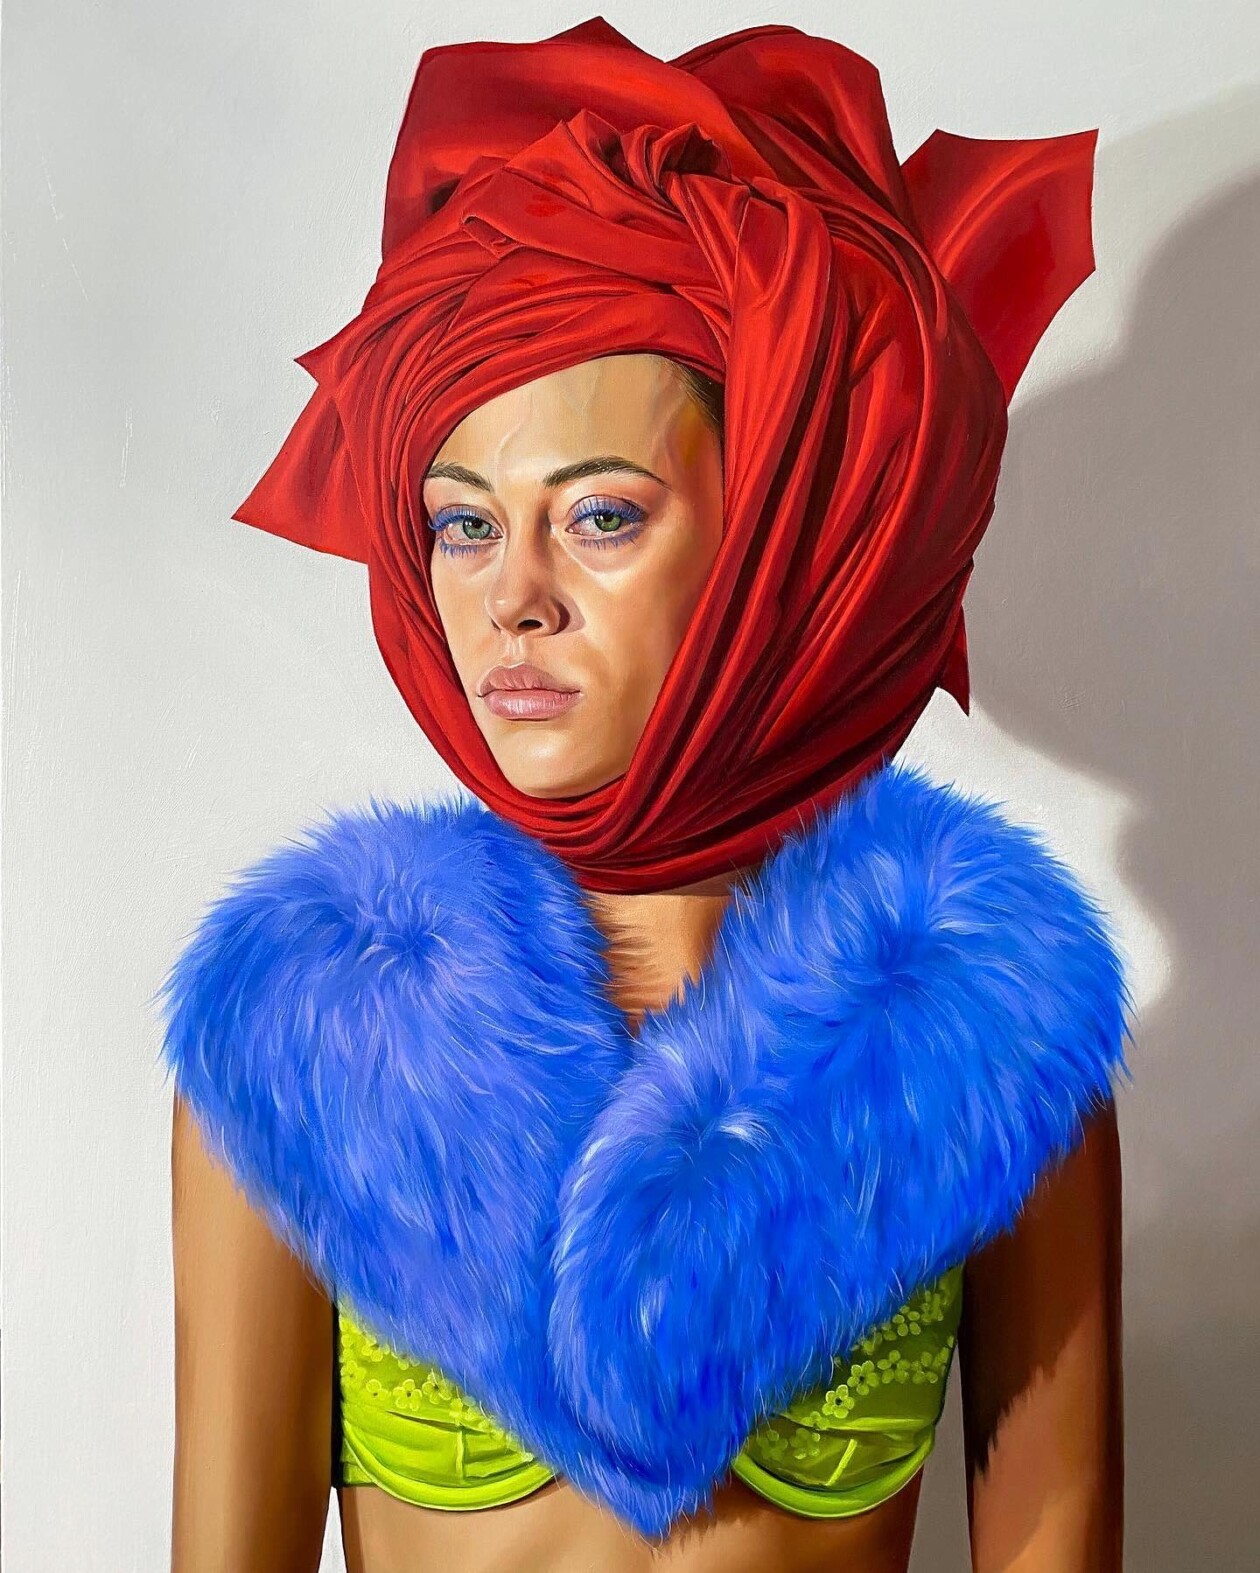 Vivid Portrait Paintings Of Female Figures By Roxanne Sauriol (14)